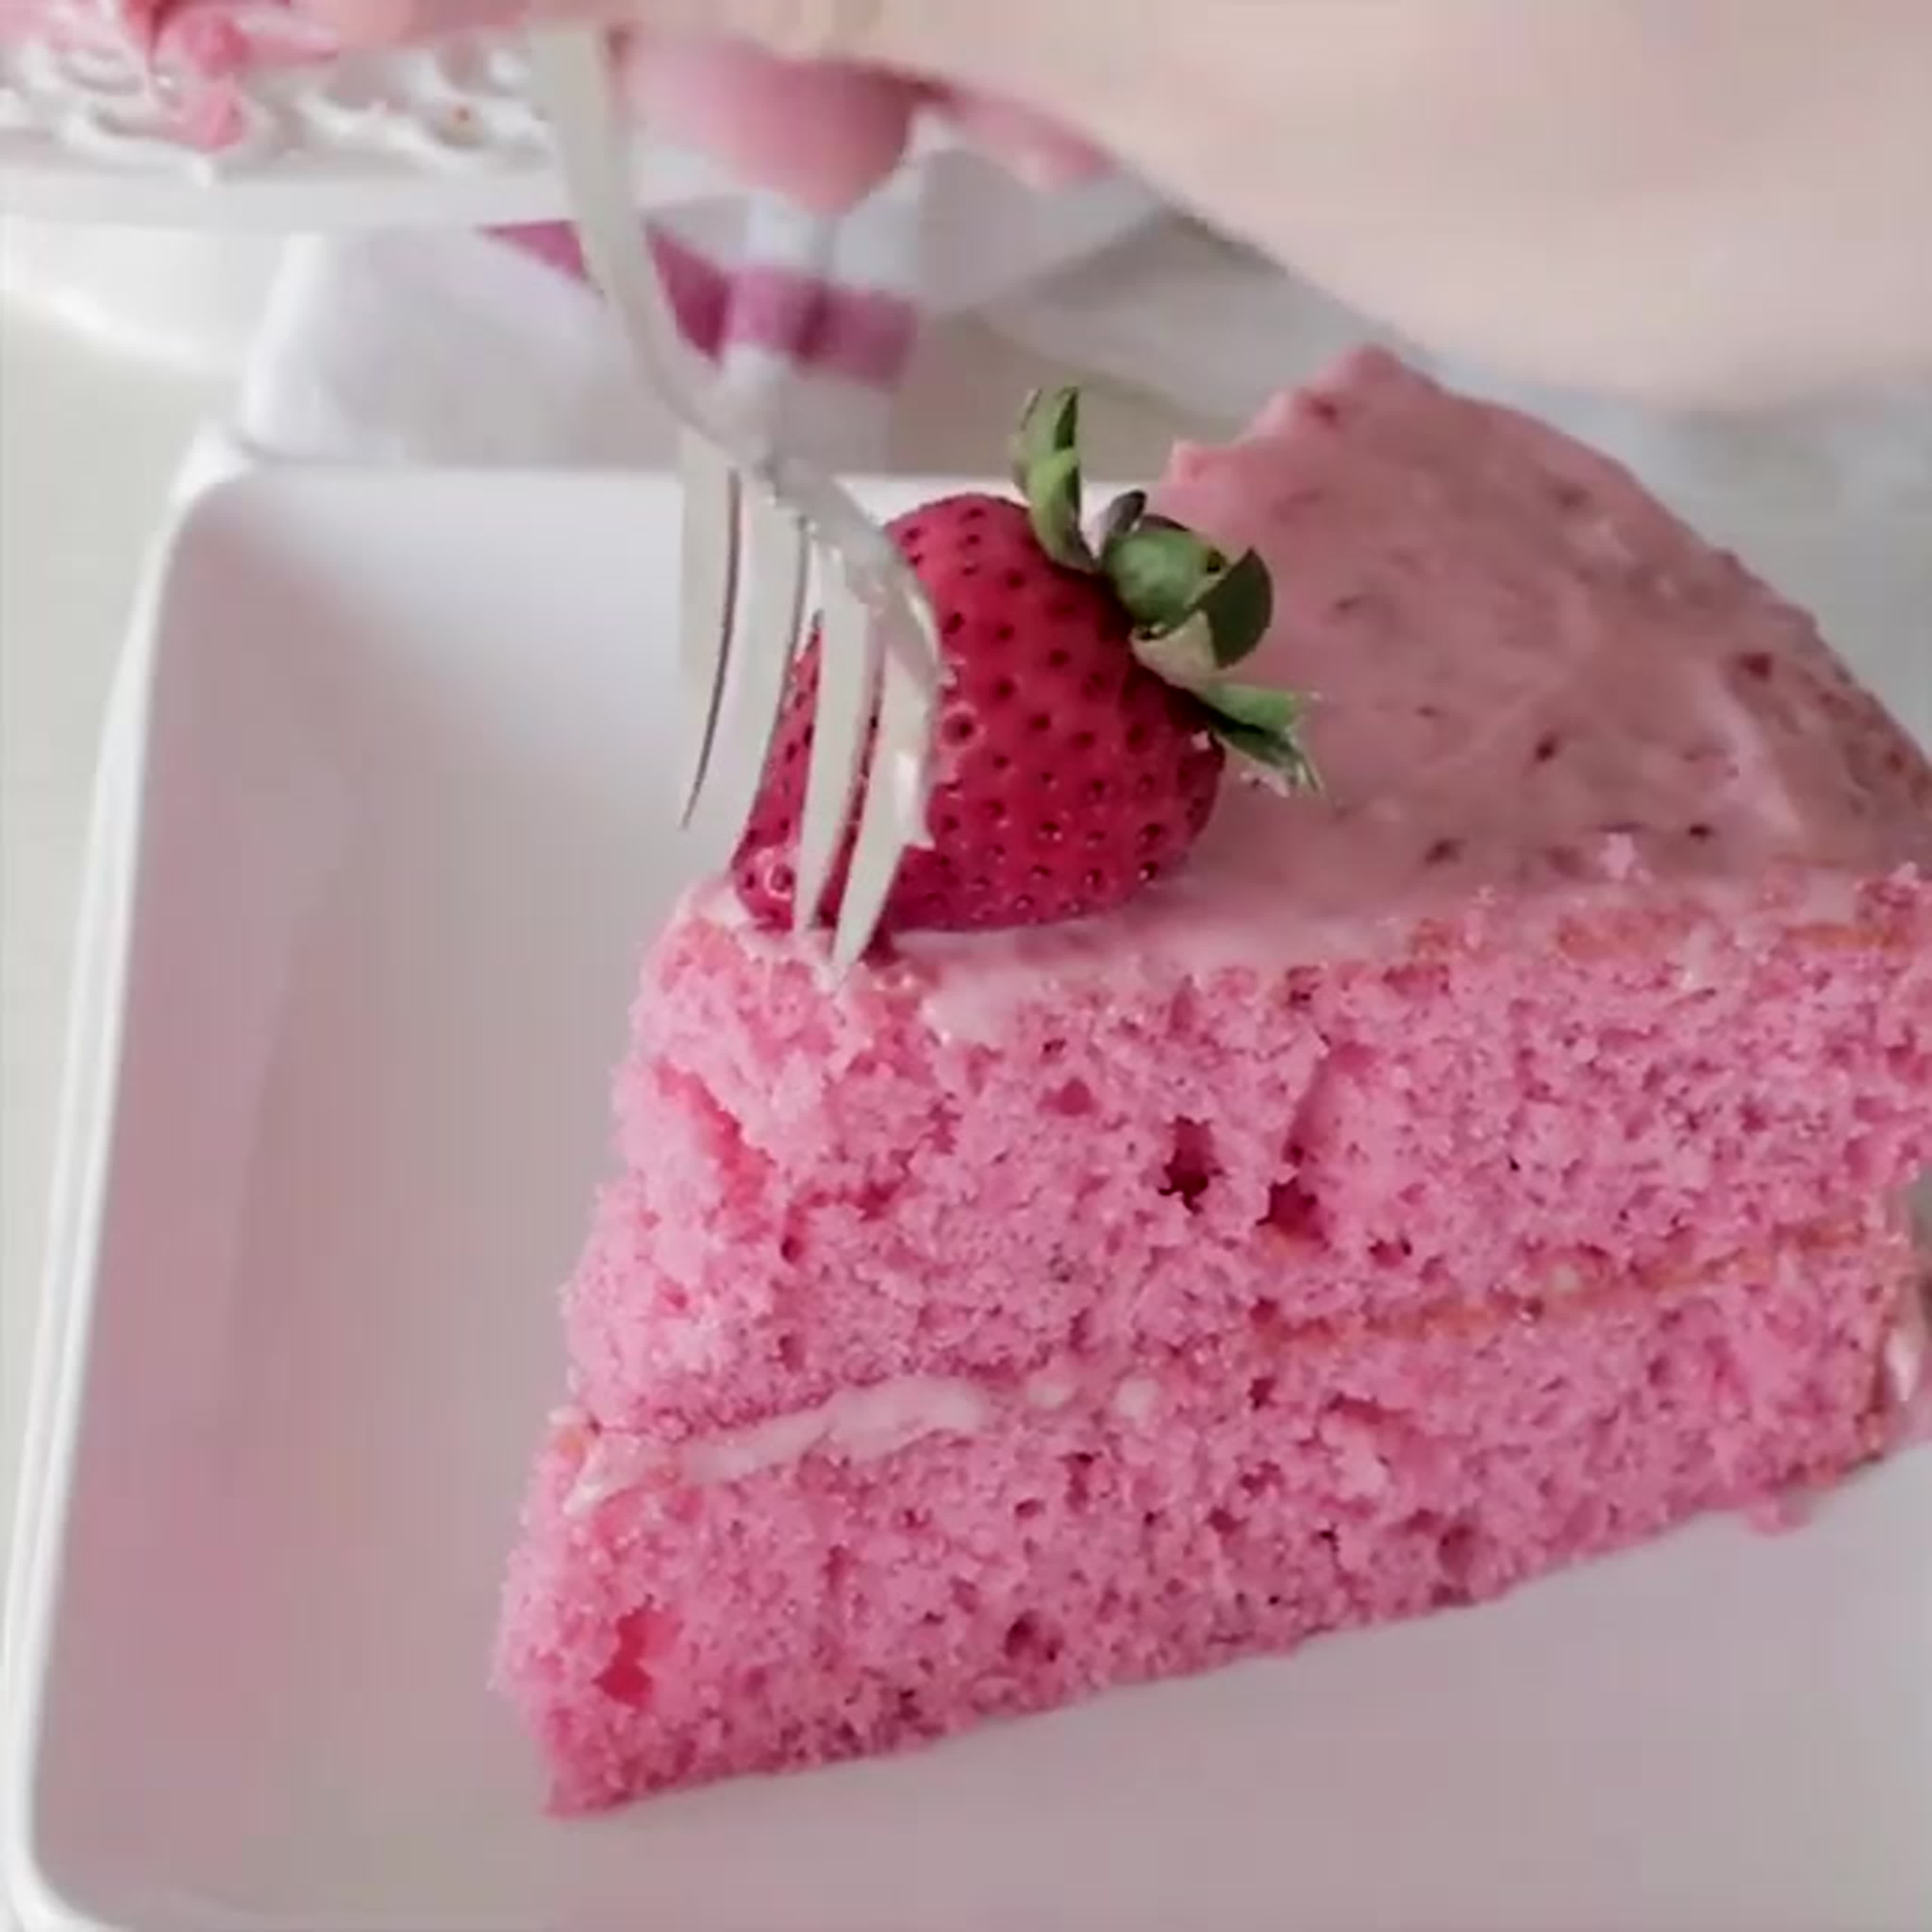 Рецепт торта клубничное облако с фото пошагово в домашних условиях